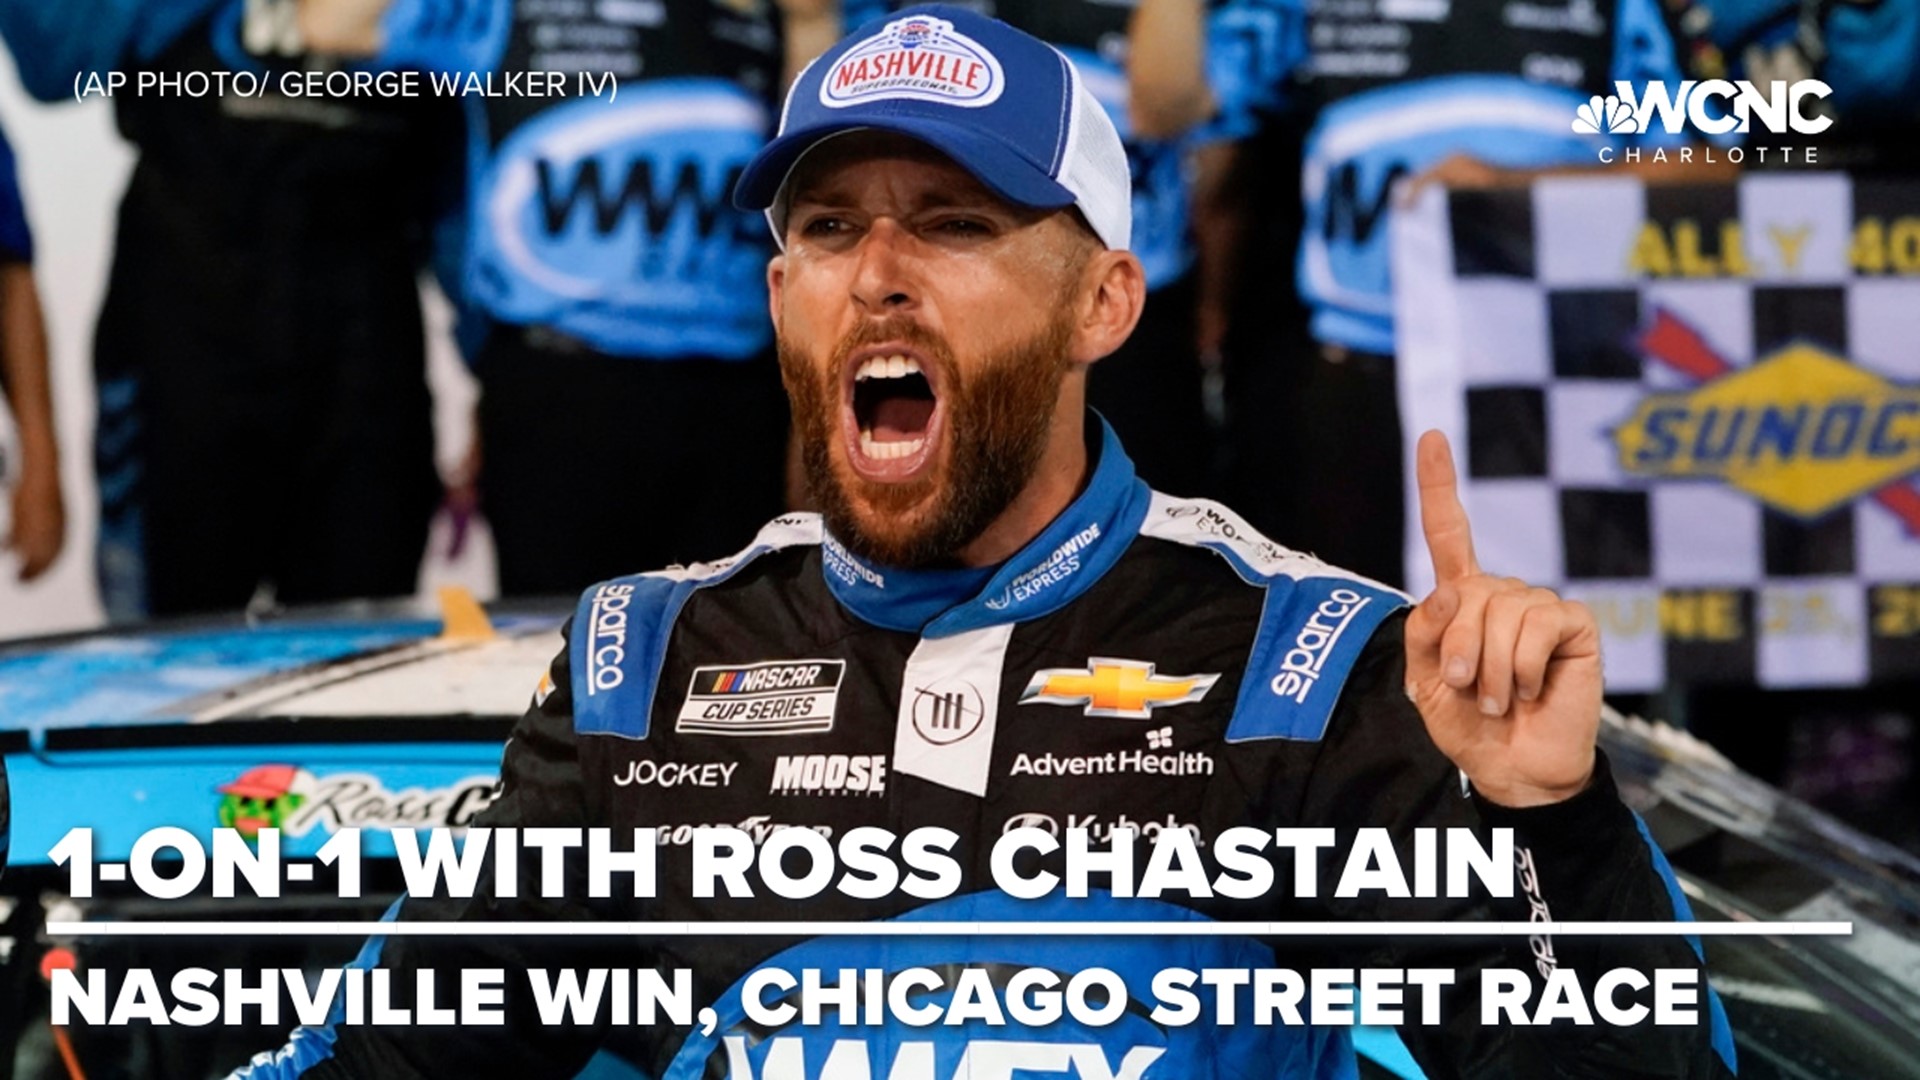 Shane Van Gisbergen wins NASCAR street course race in Chicago wcnc